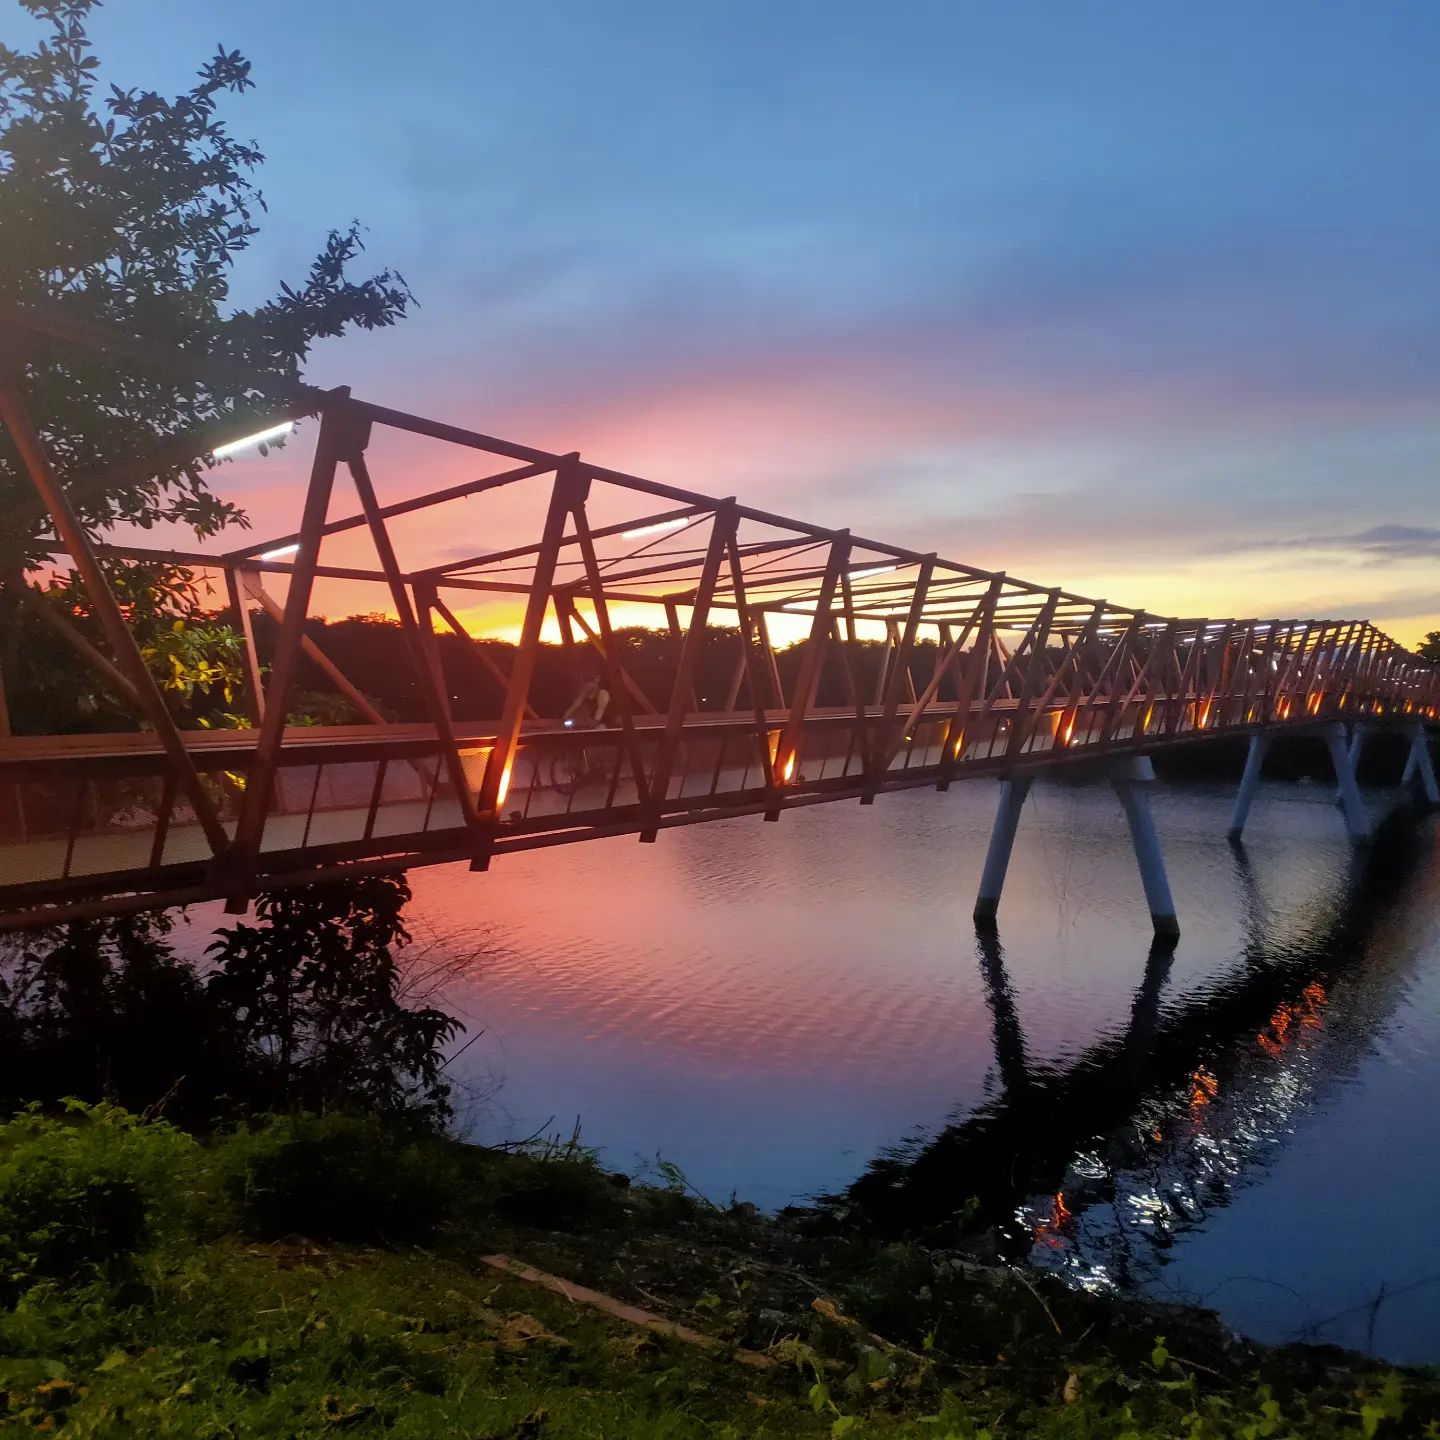 Sunrise & sunset spots in Singapore - Lorong Halus Wetland red bridge